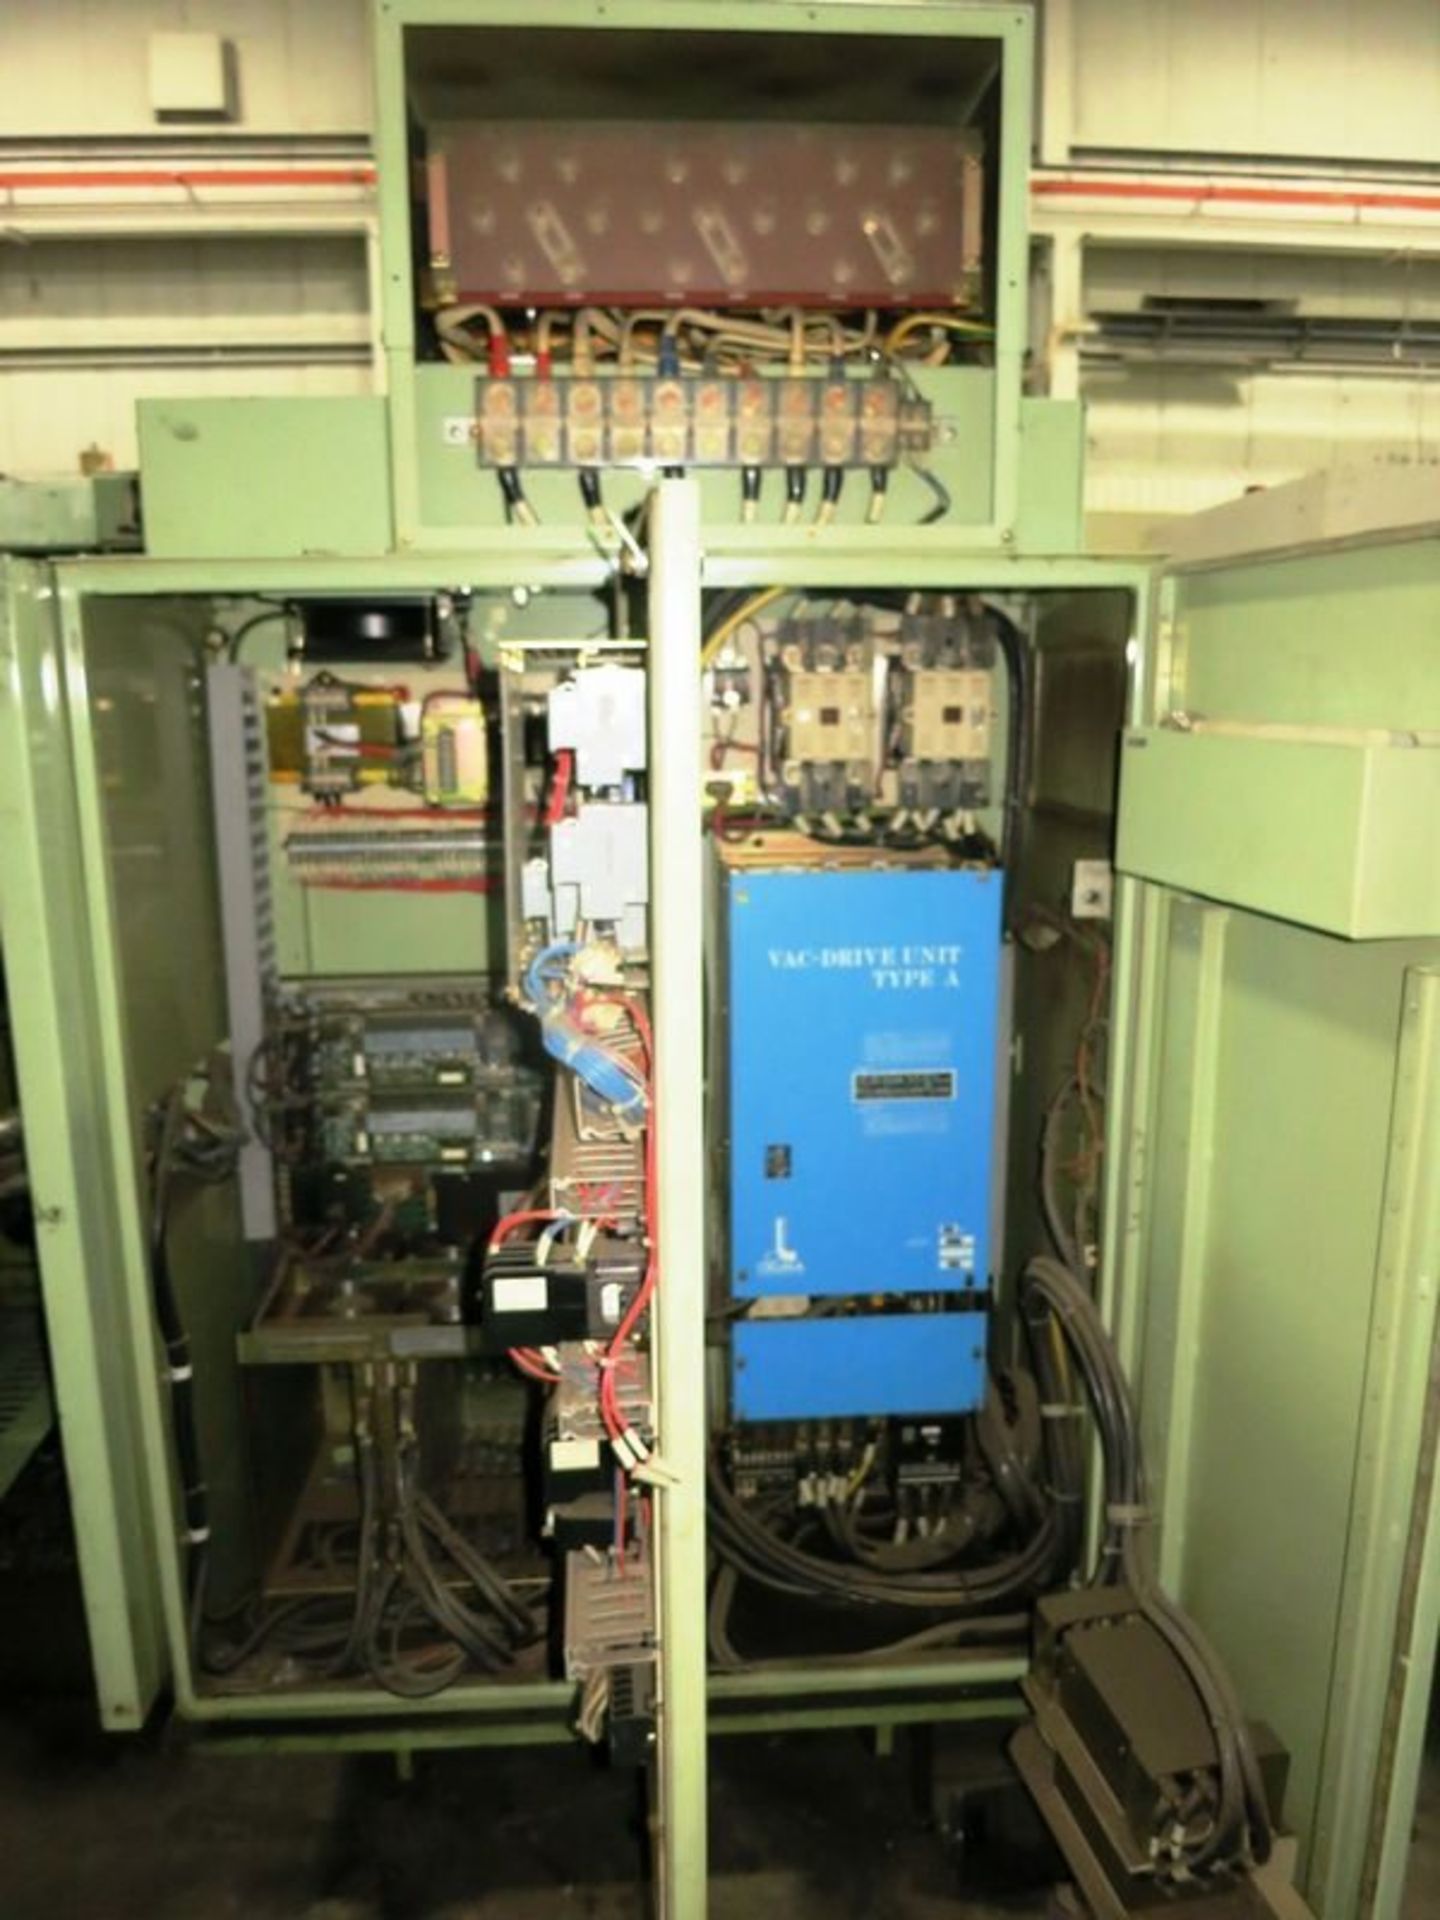 OKUMA MODEL LB25 2-AXIS CNC TURNING CENTER, S/N 0202-0467, NEW 1990 - Image 8 of 8